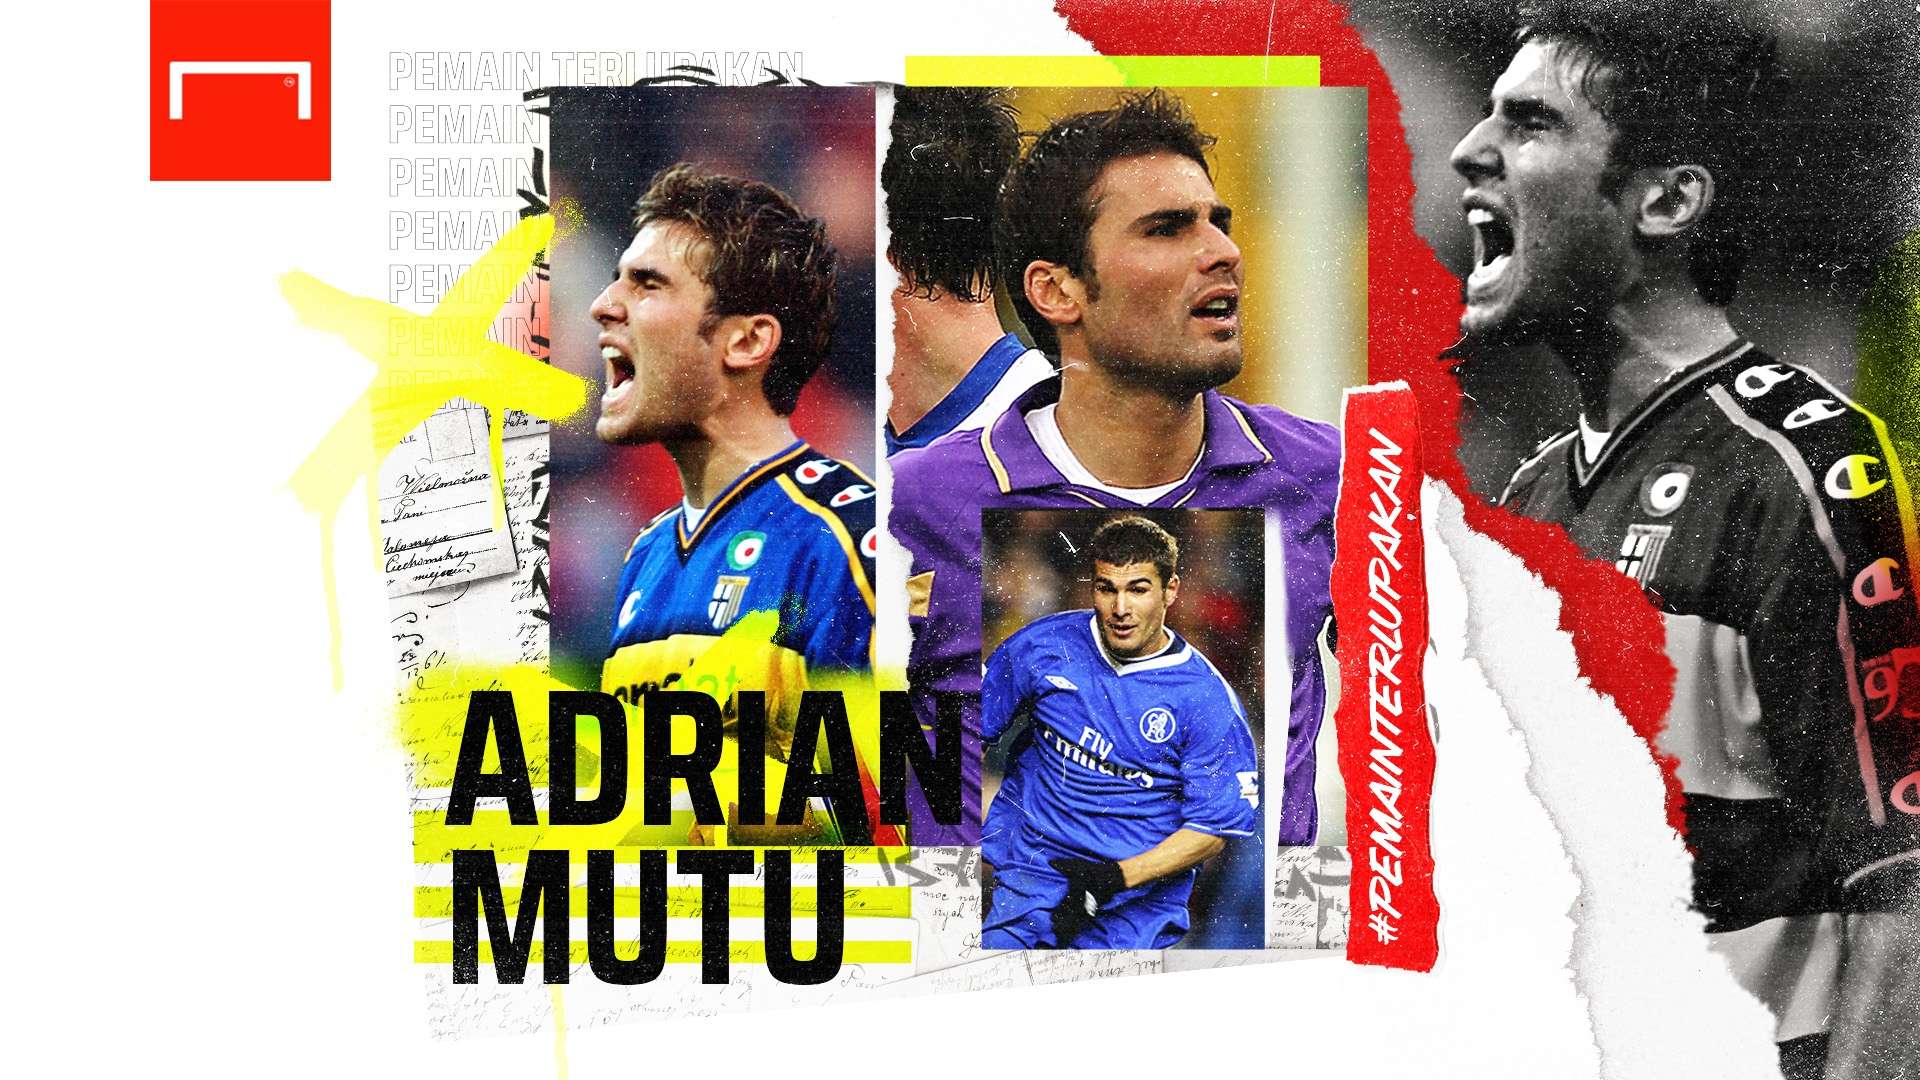 Adrian Mutu - Pemain Terlupakan